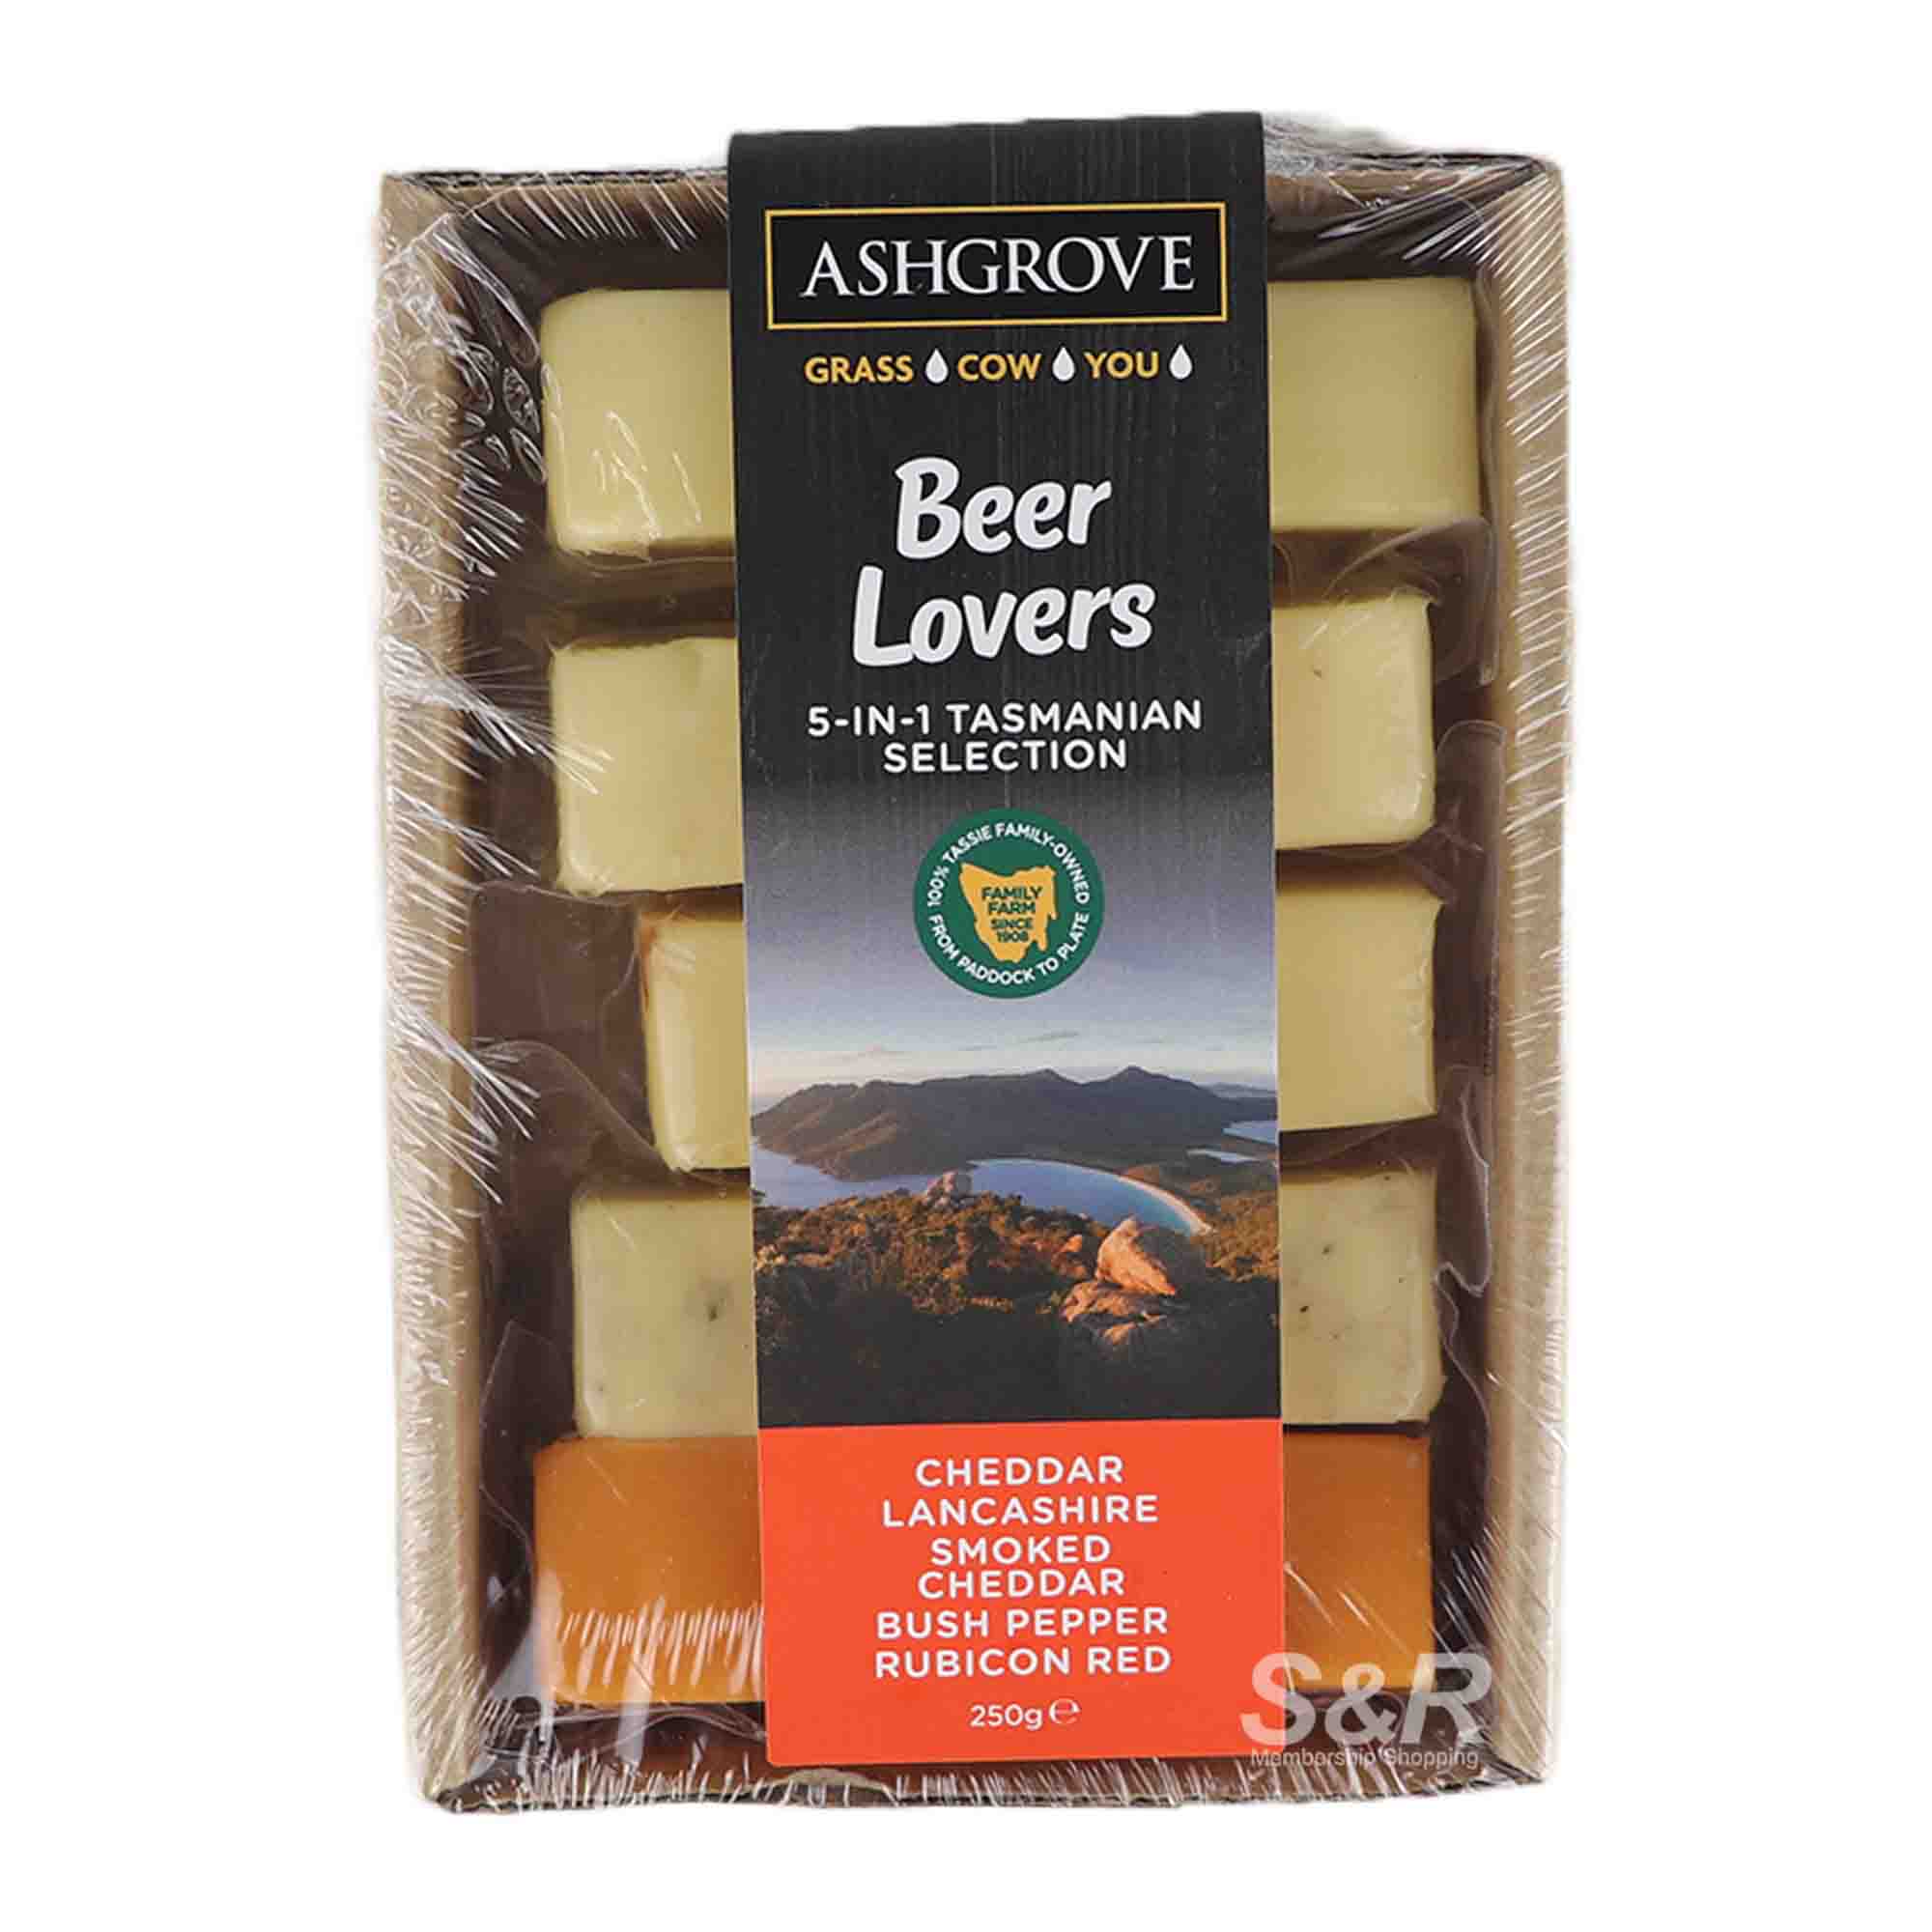 Ashgrove 5-in-1 Tasmanian Selection Beer Lovers (50g x 5pcs)